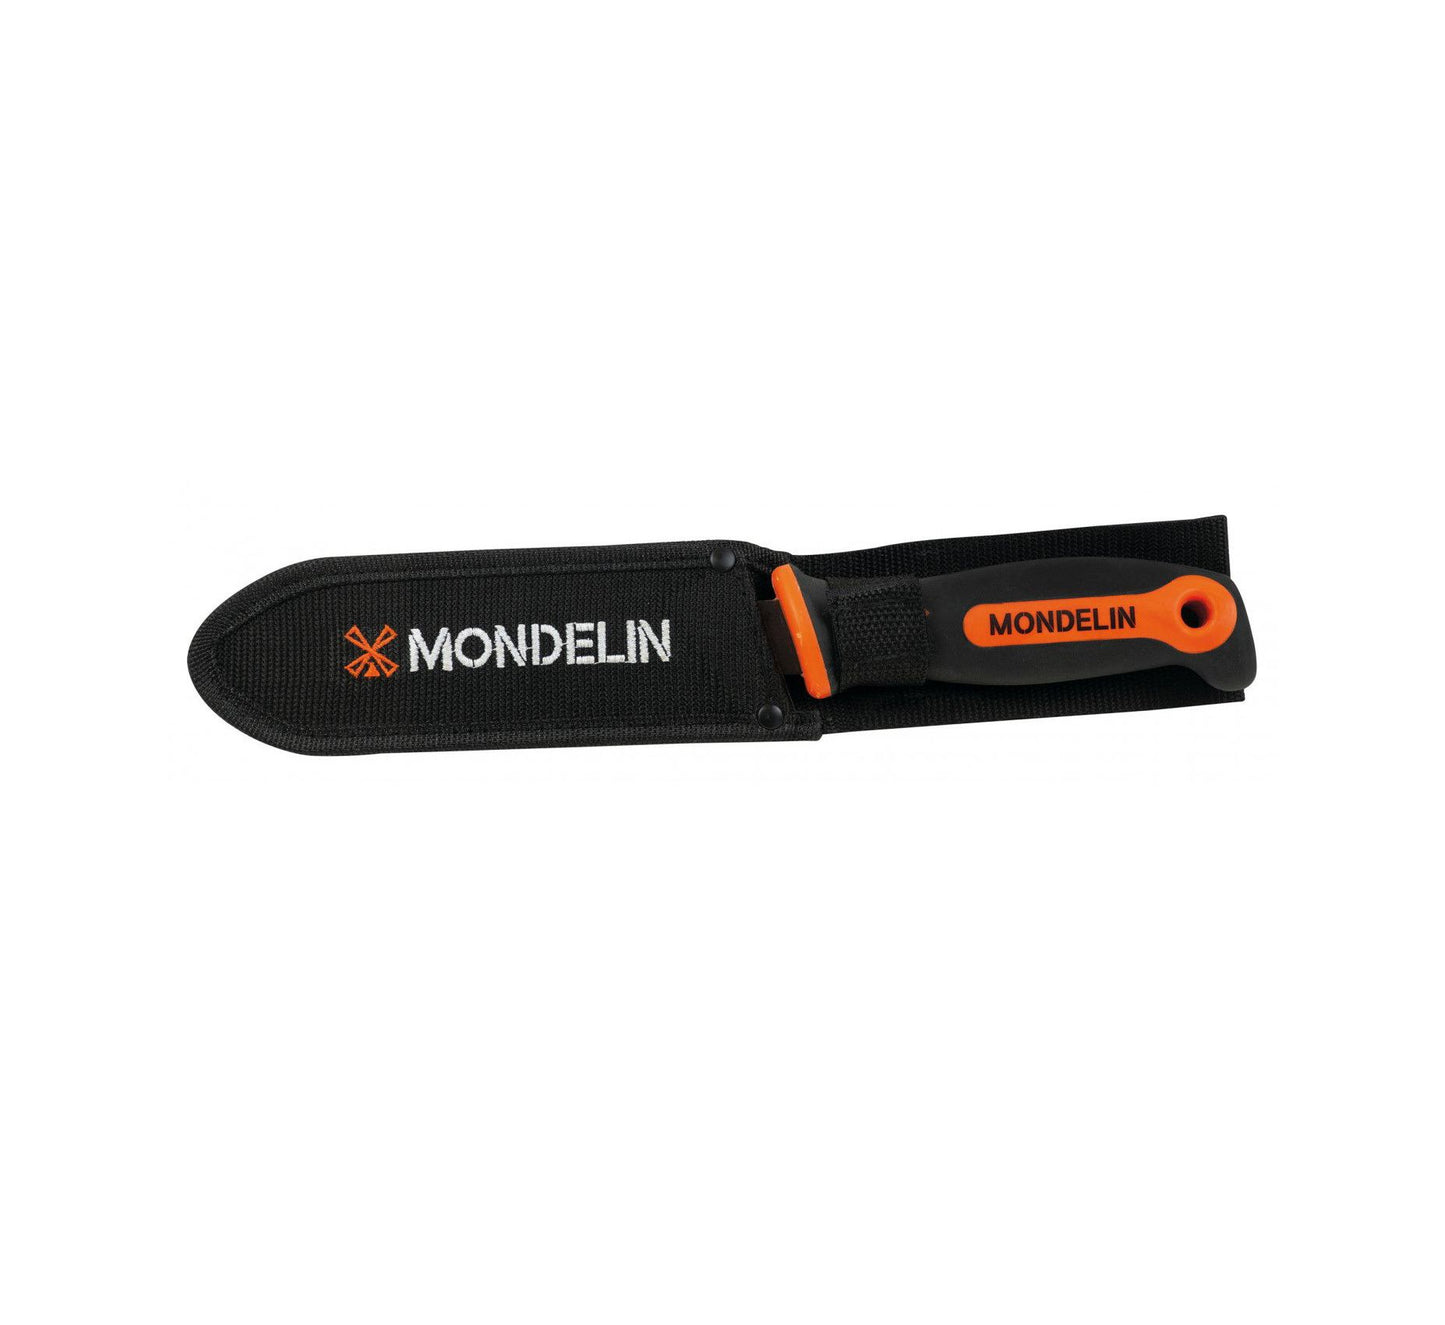 Sierra alternativa de doble hoja de 16 cm Mondelin MONDELIN - 6